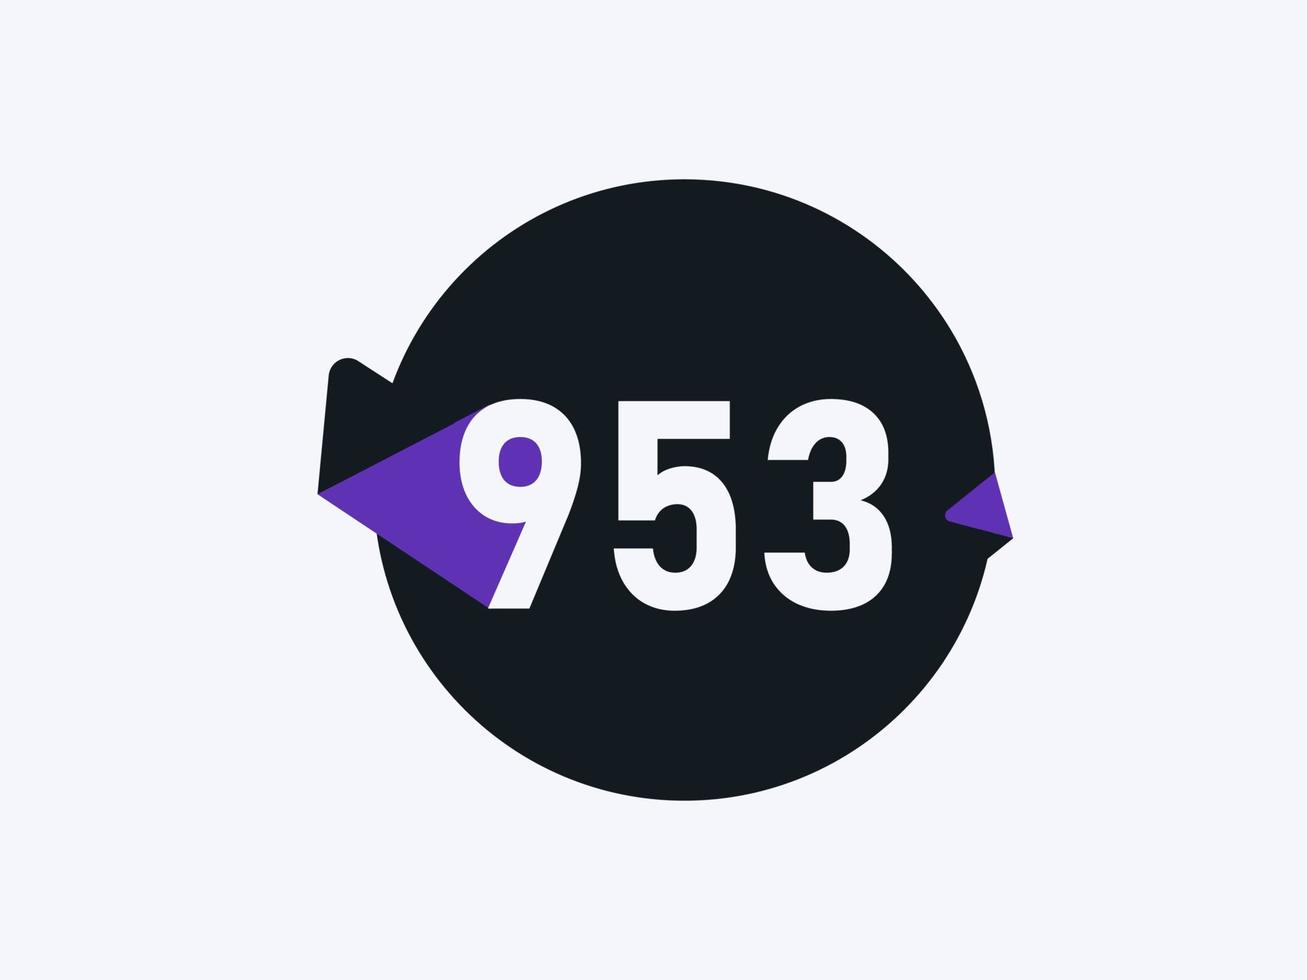 953 Number logo icon design vector image. Number logo icon design vector image